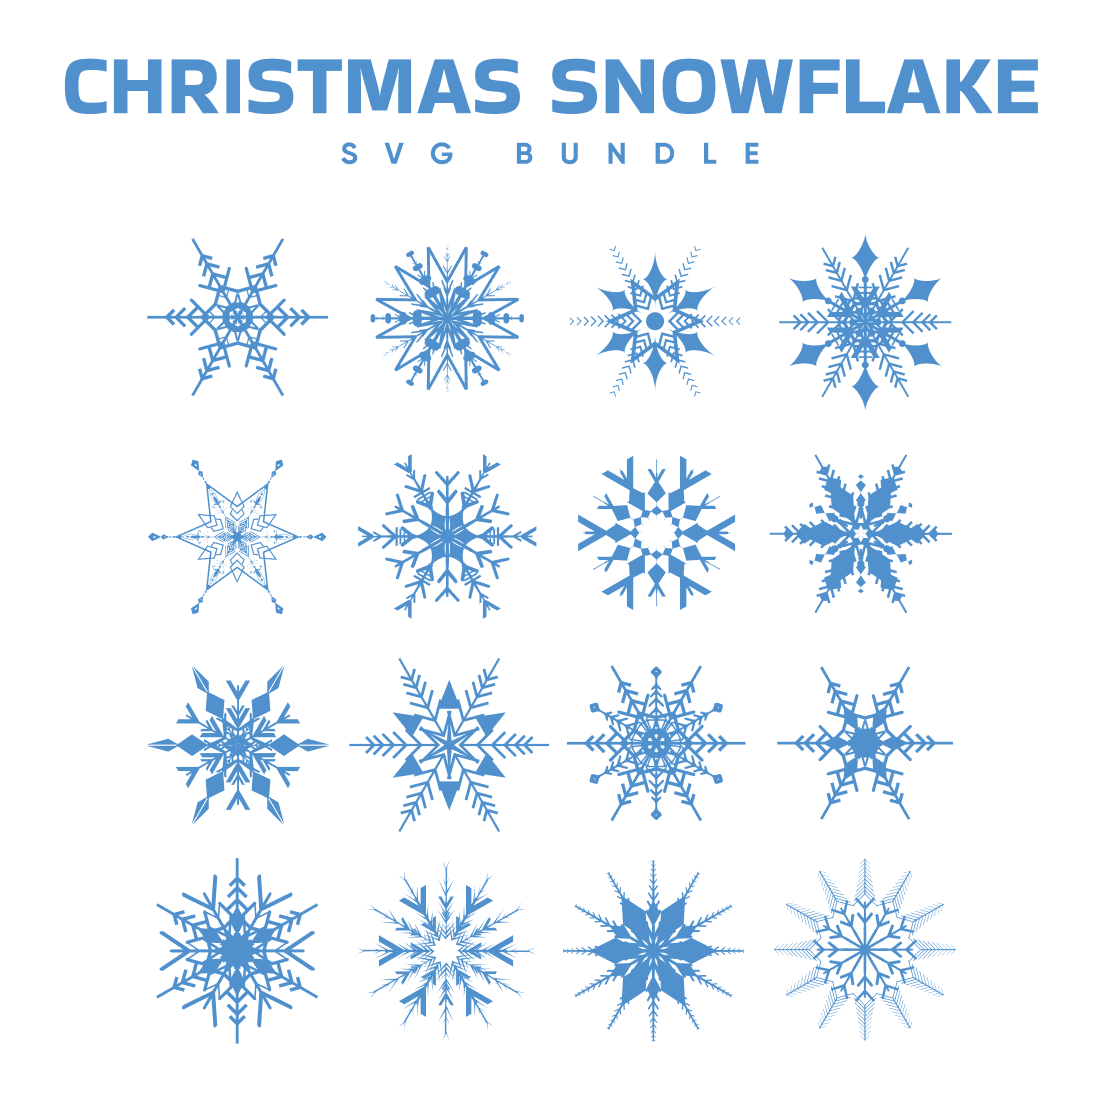 Christmas Snowflake SVG - main image preview.